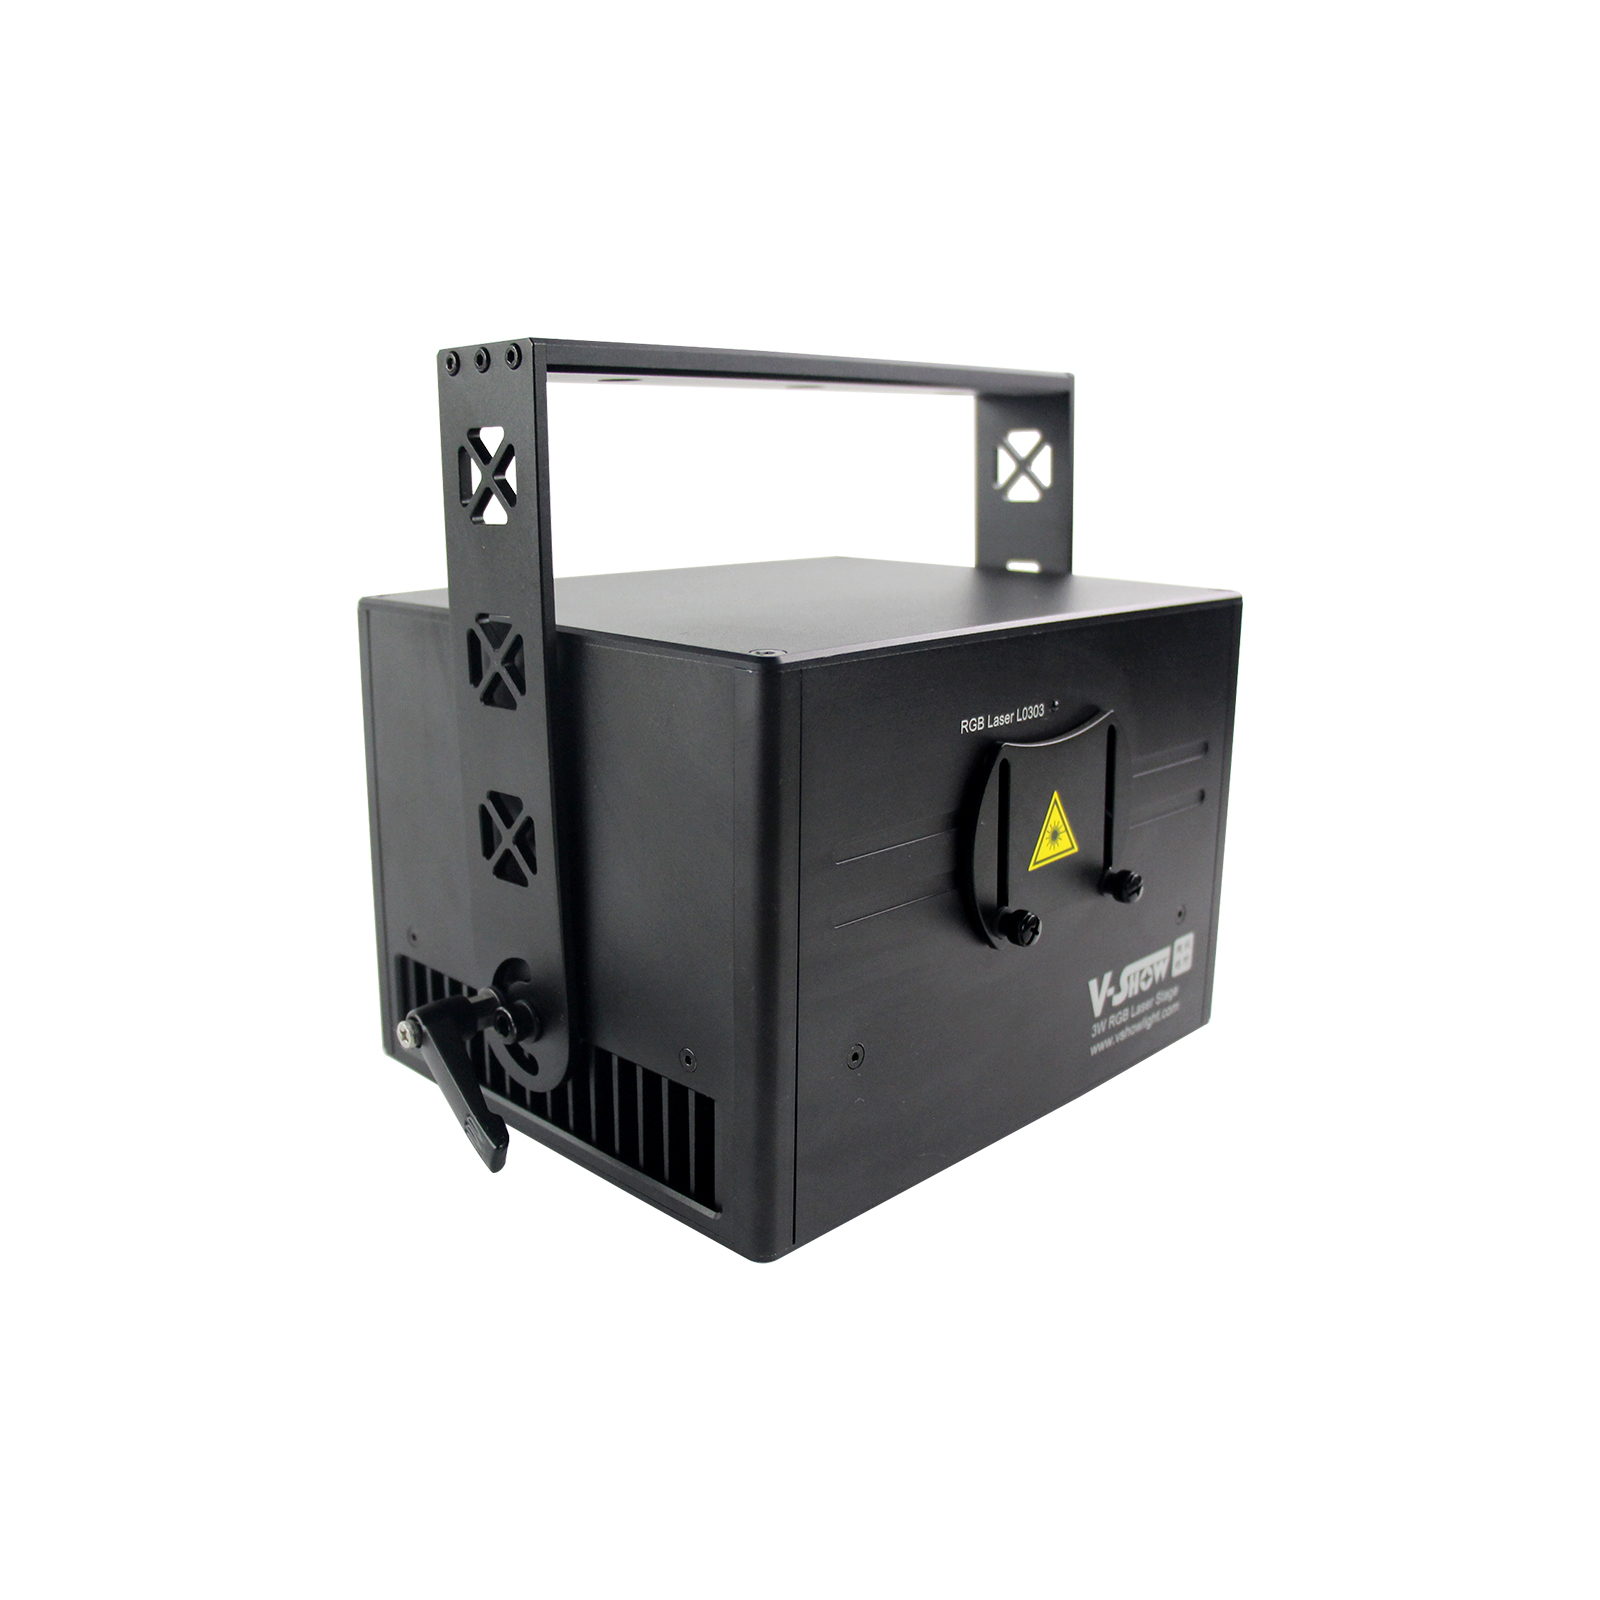 VSHOW L0303 3W RGB Animation Laser LDA30Kppc±45 degree Scanner